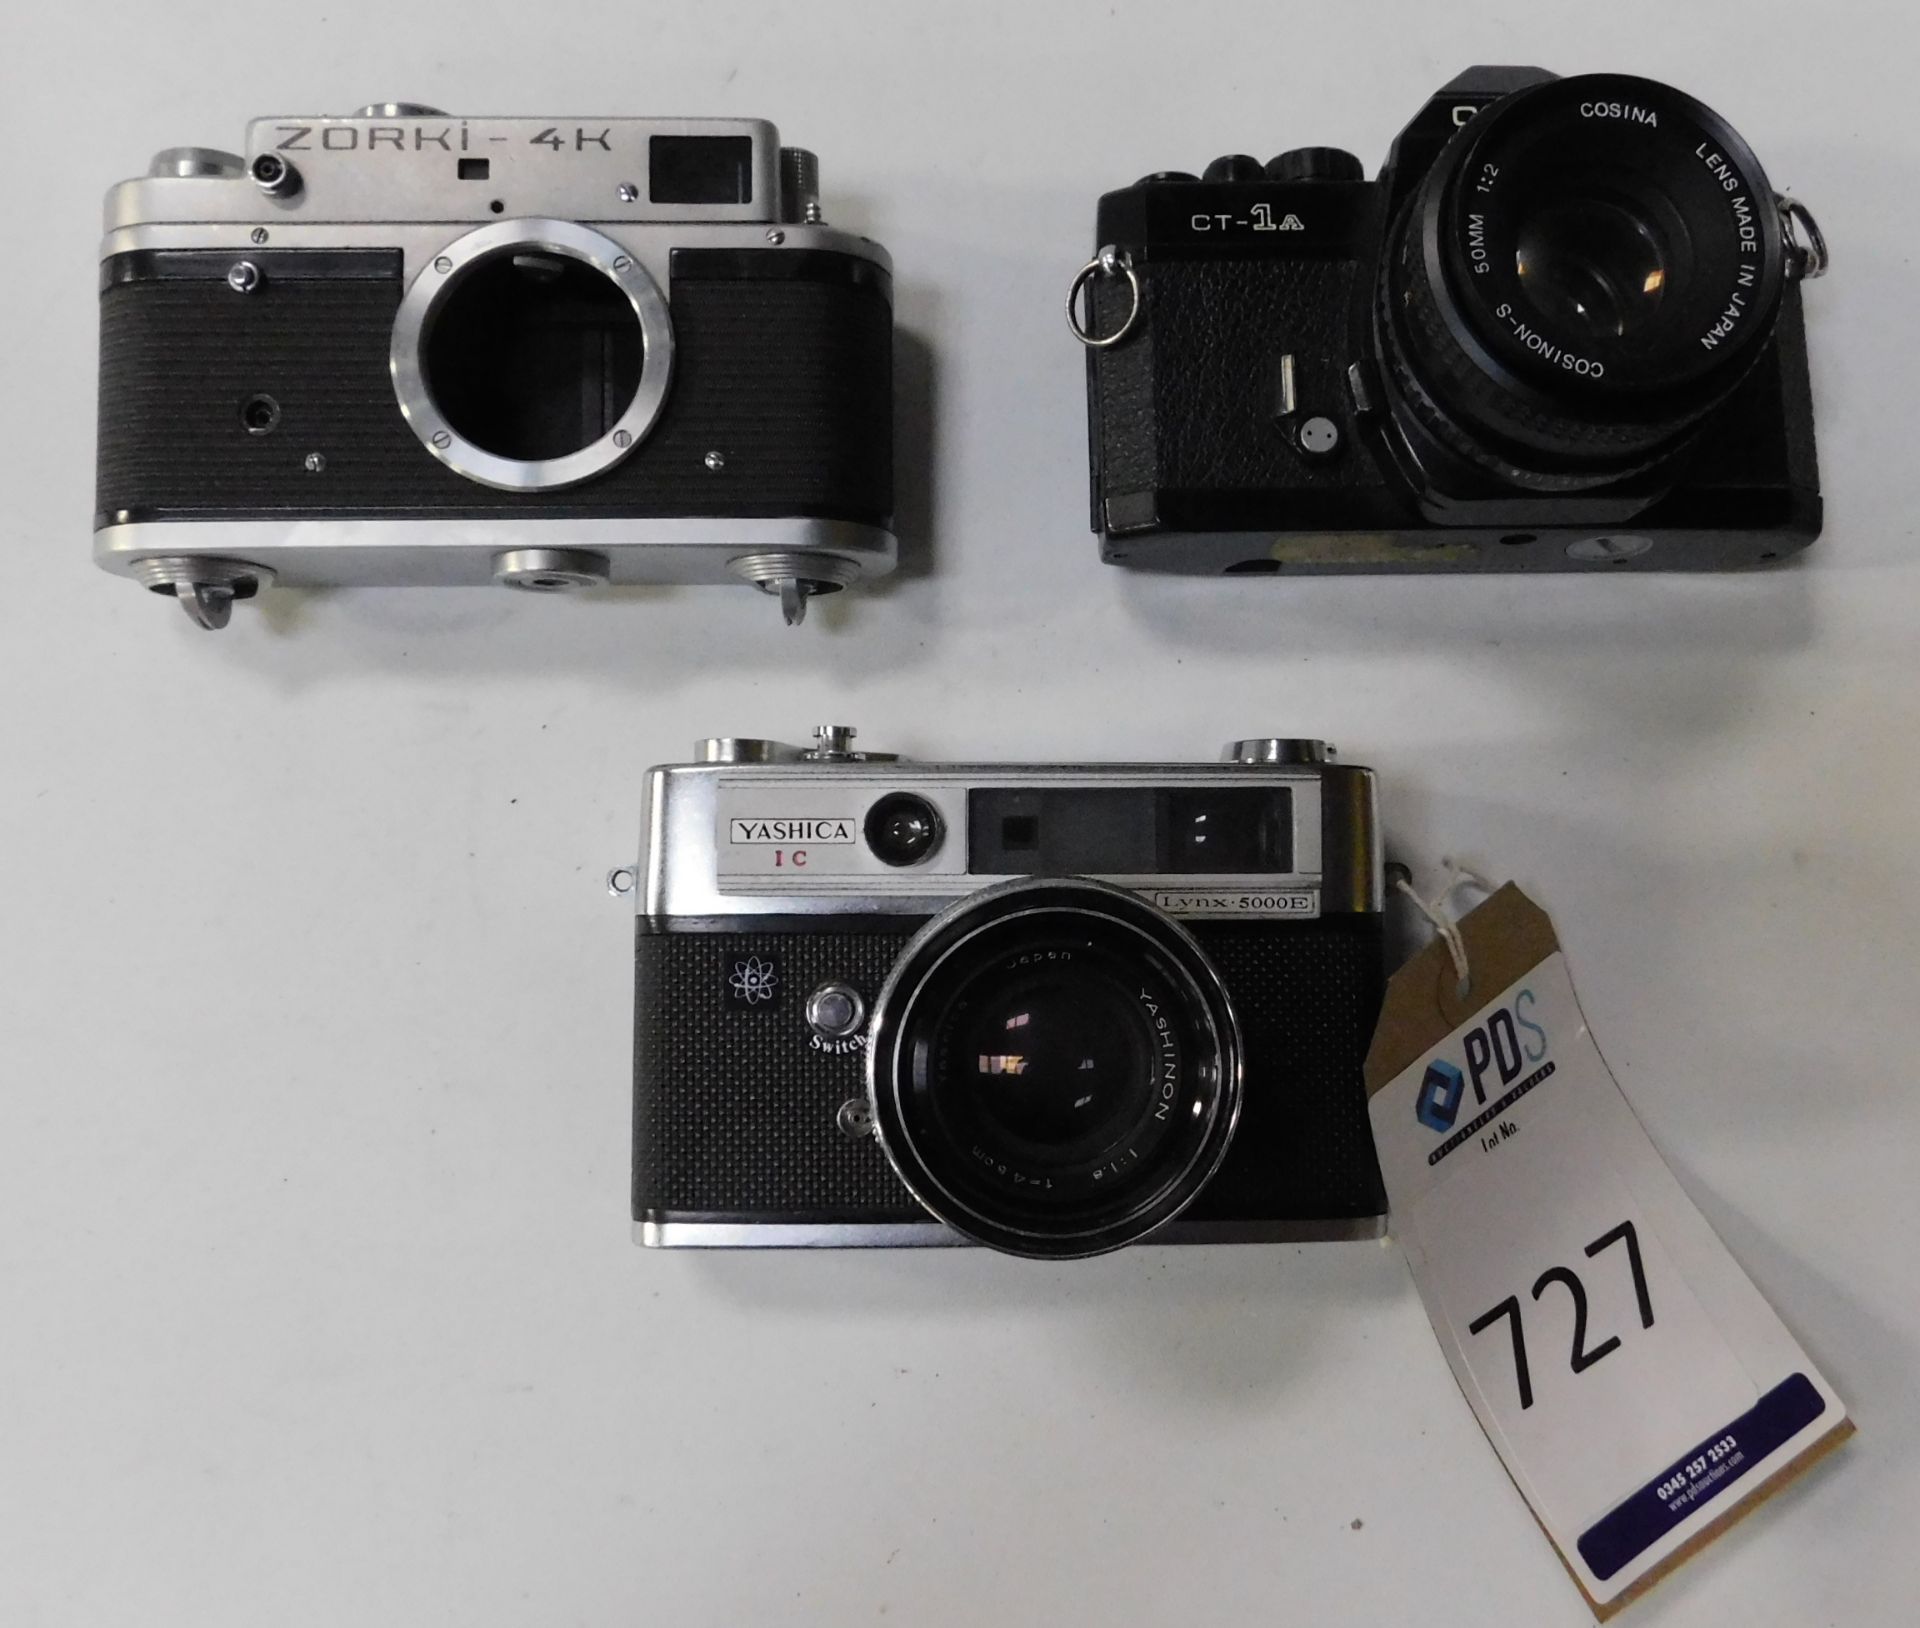 Zorki 4K Film Camera, Number 76780614, Yashica IC Lynx 5000E Film Camera, Number 010522 & Cosina